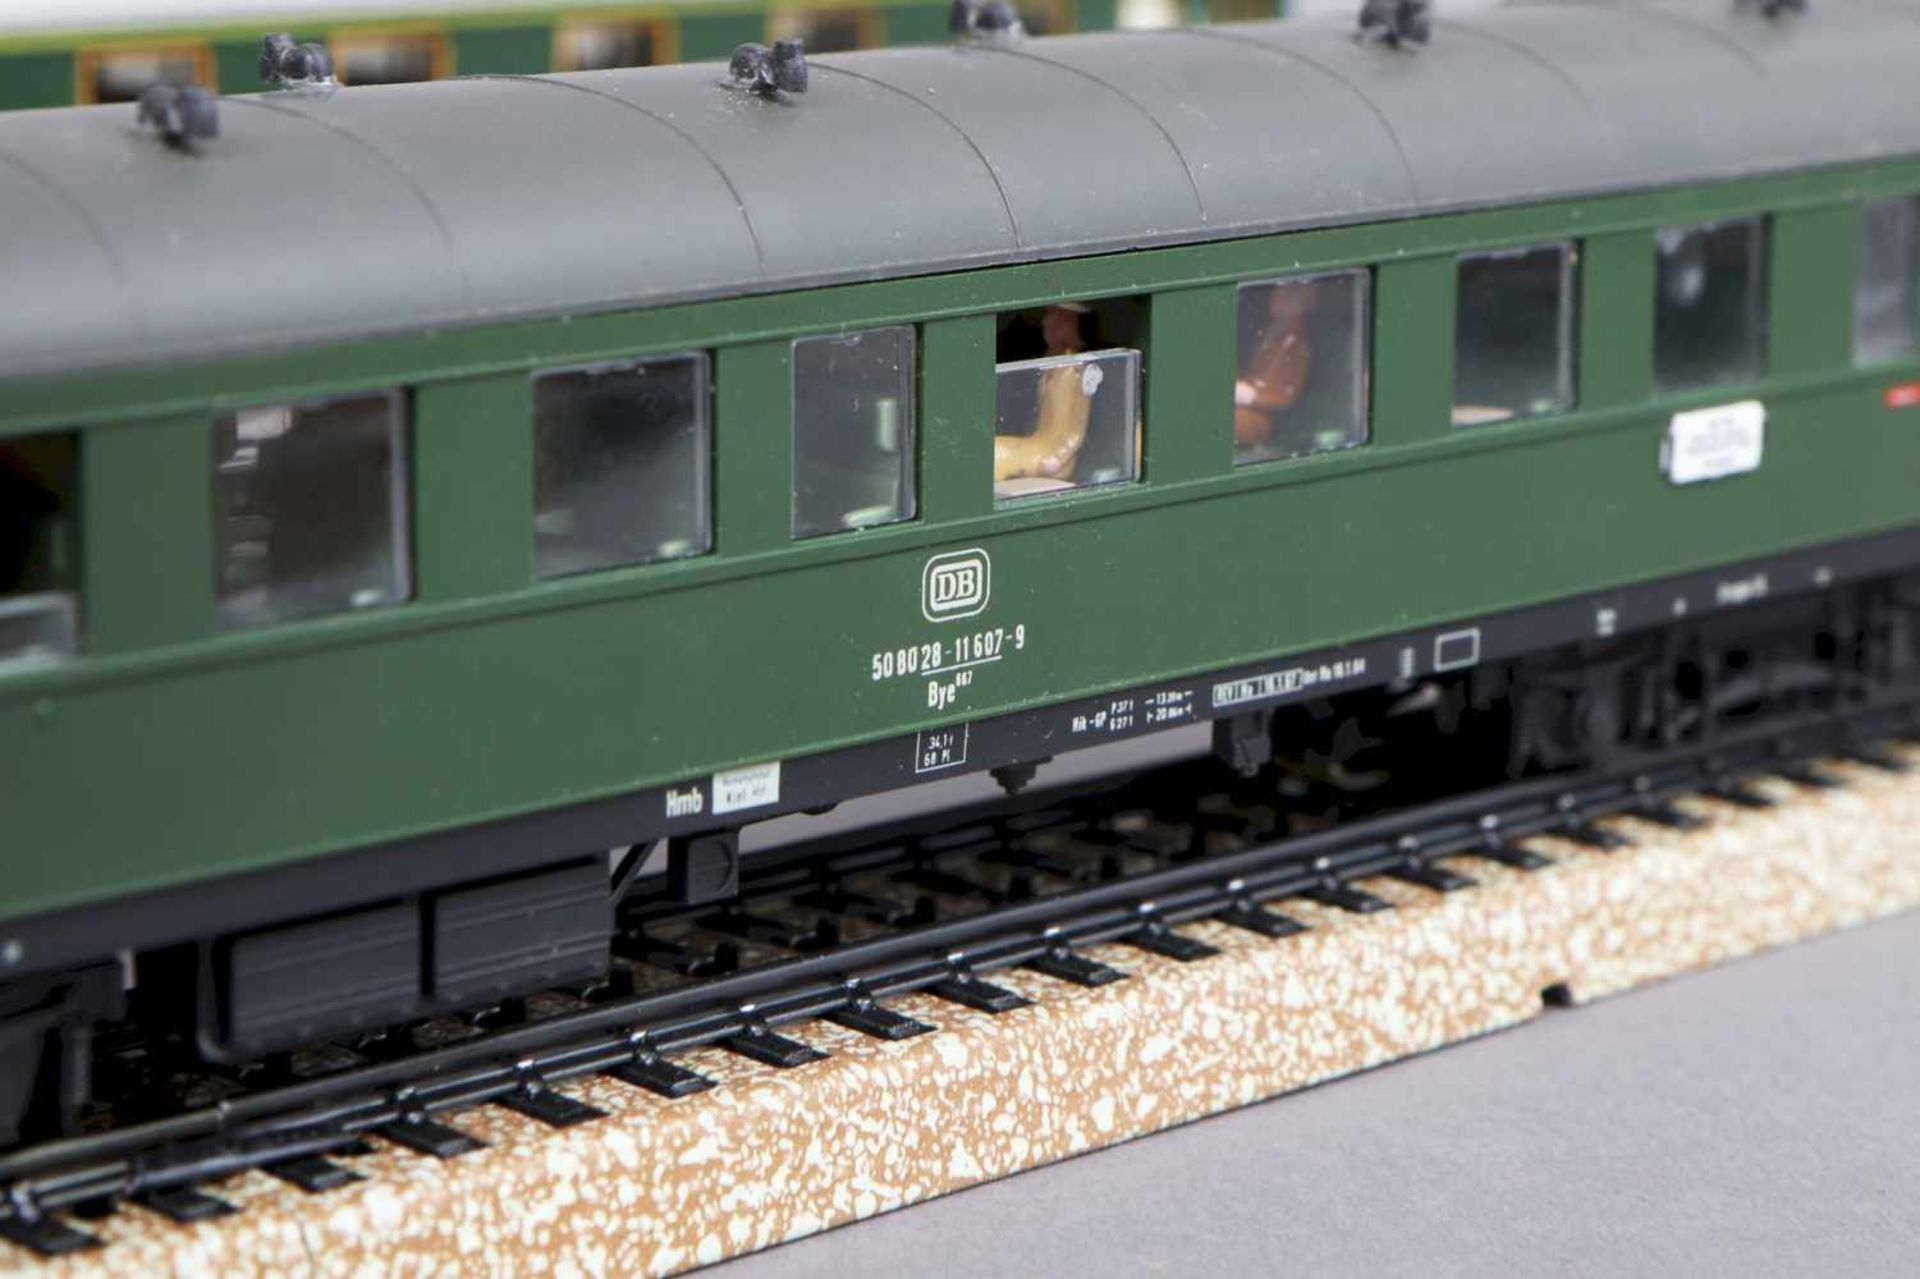 MÄRKLIN Modelleisenbahn Spur H0 5 Wagons, DB, grün/grau, 1., 2. und 3. Klasse sowie 1 Güterwagon, - Image 2 of 2